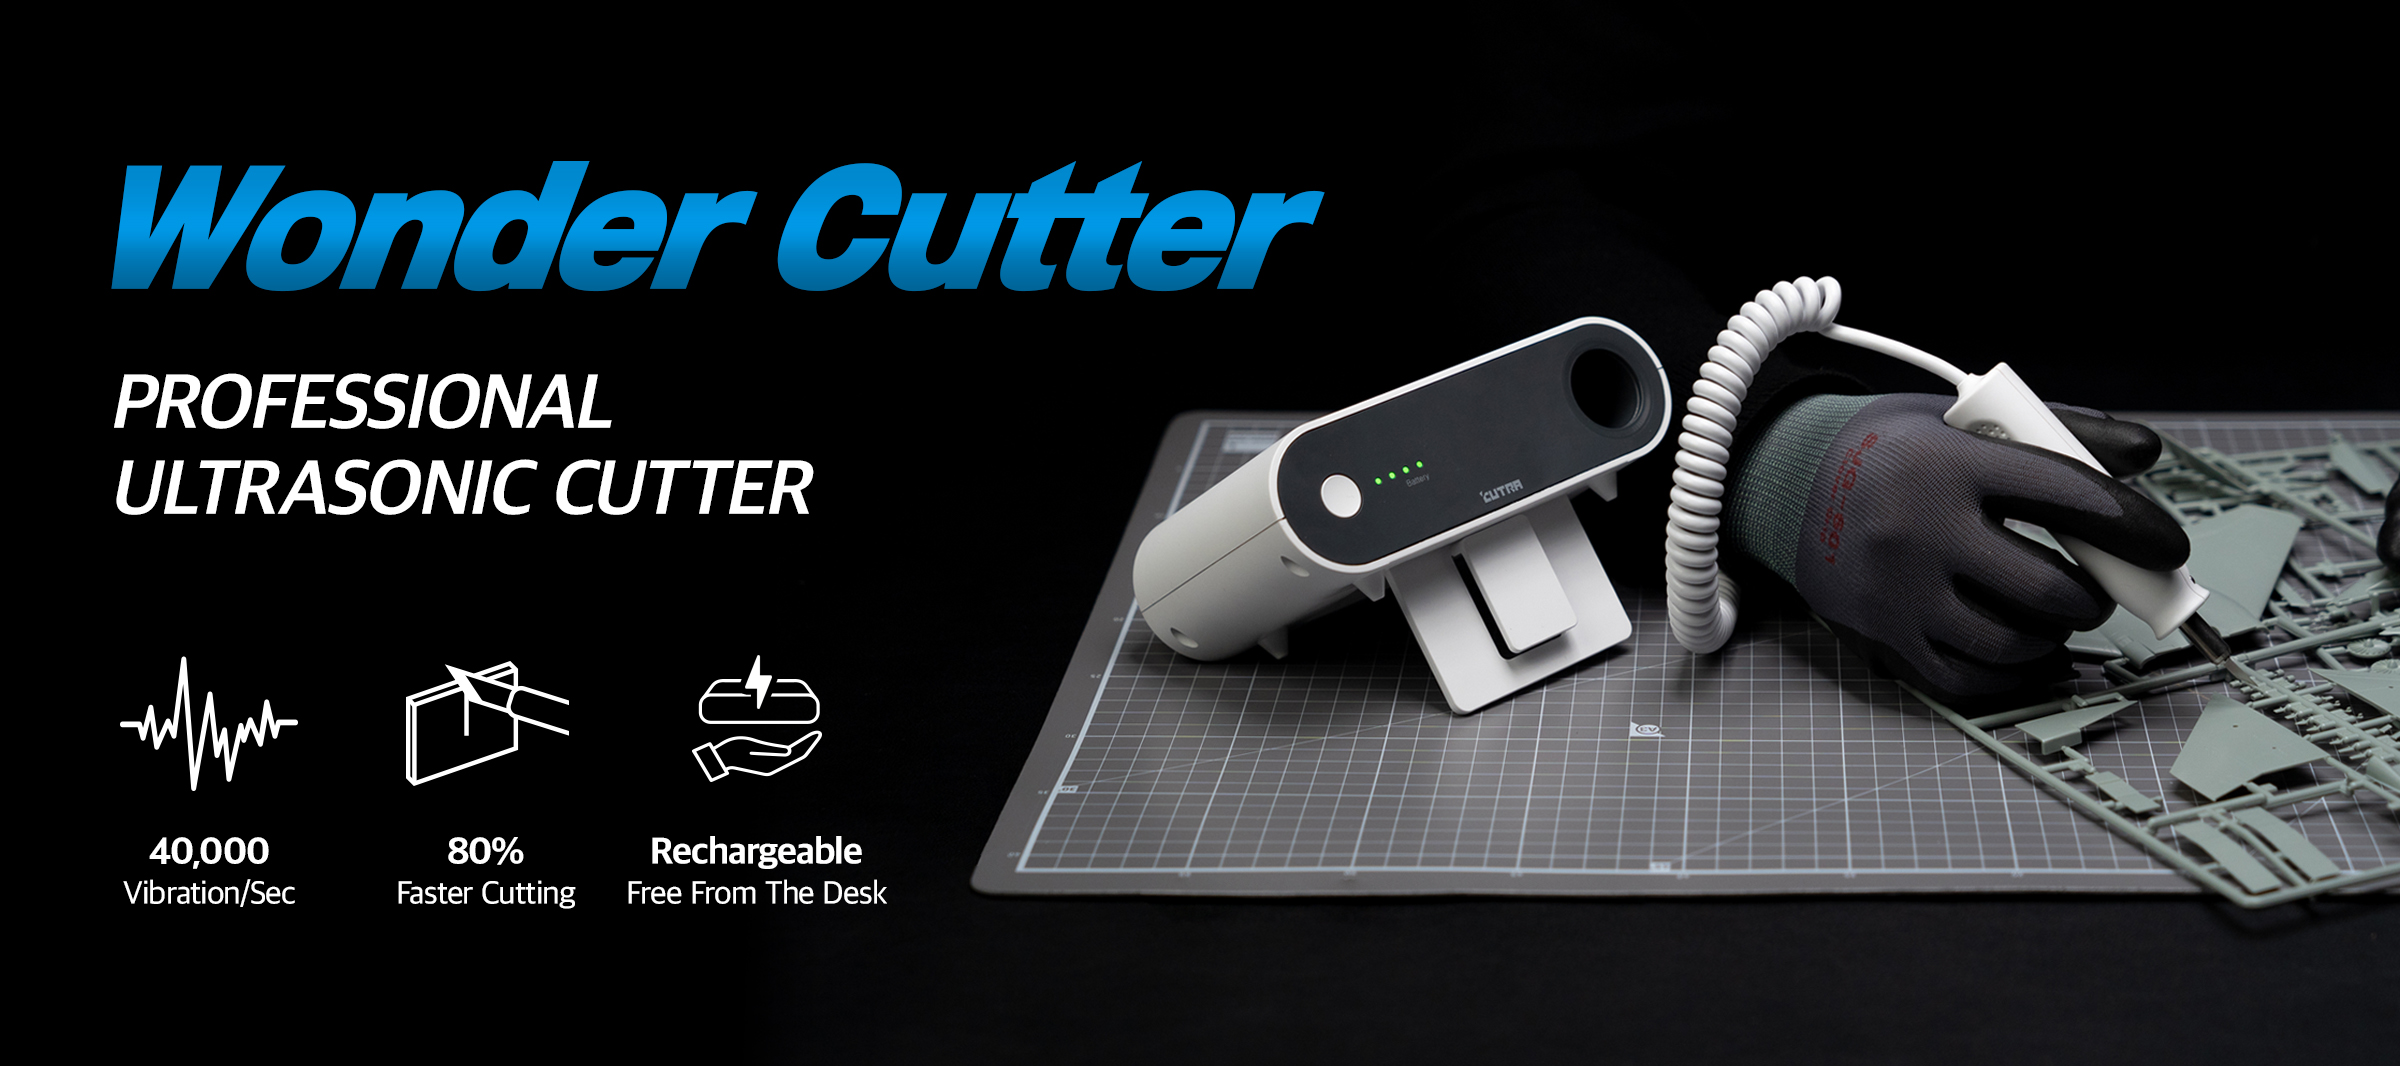 The Wondercutter S ultrasonic cutter precision cutting using 40,000  ultrasonic vibrations per second 